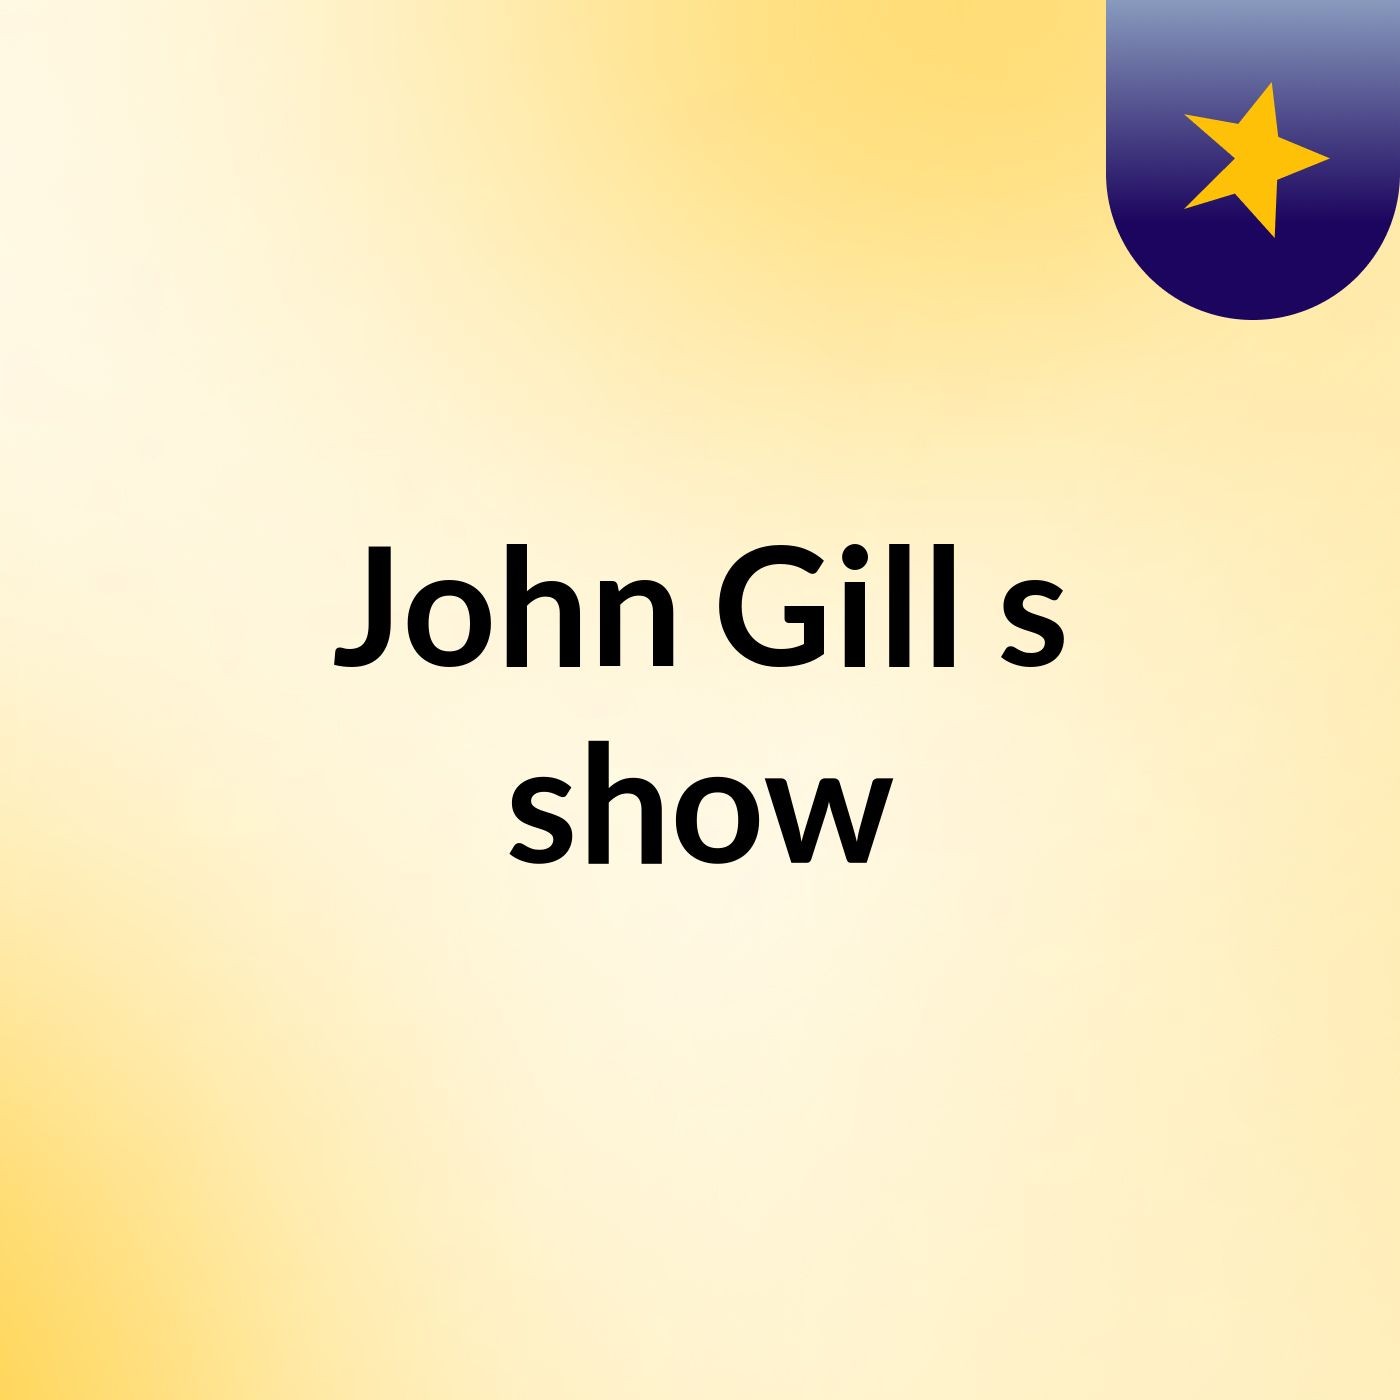 John Gill's show